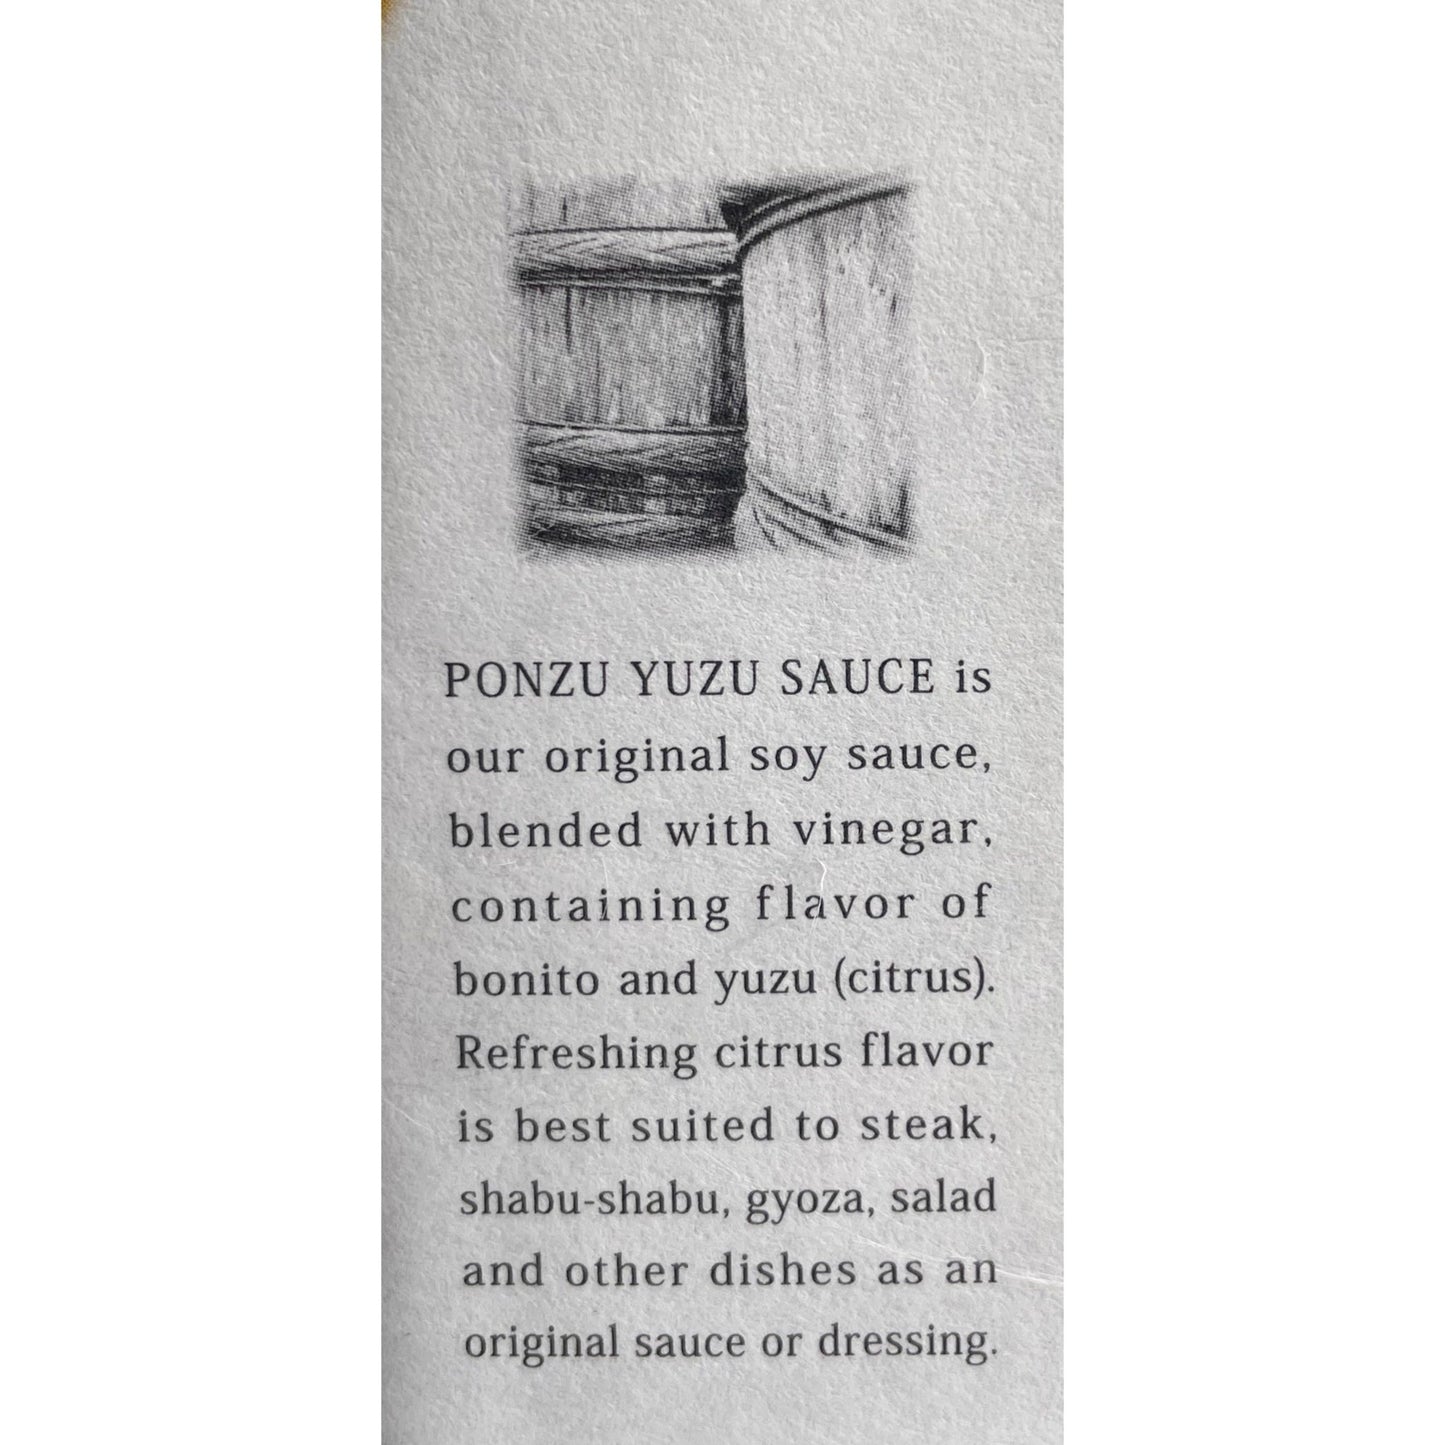 Shibanuma Ponzu Yuzu Sauce 300ml / 柴沼醤油醸造 紫峰 ゆずかつおポン酢 300ml - RiceWineShop